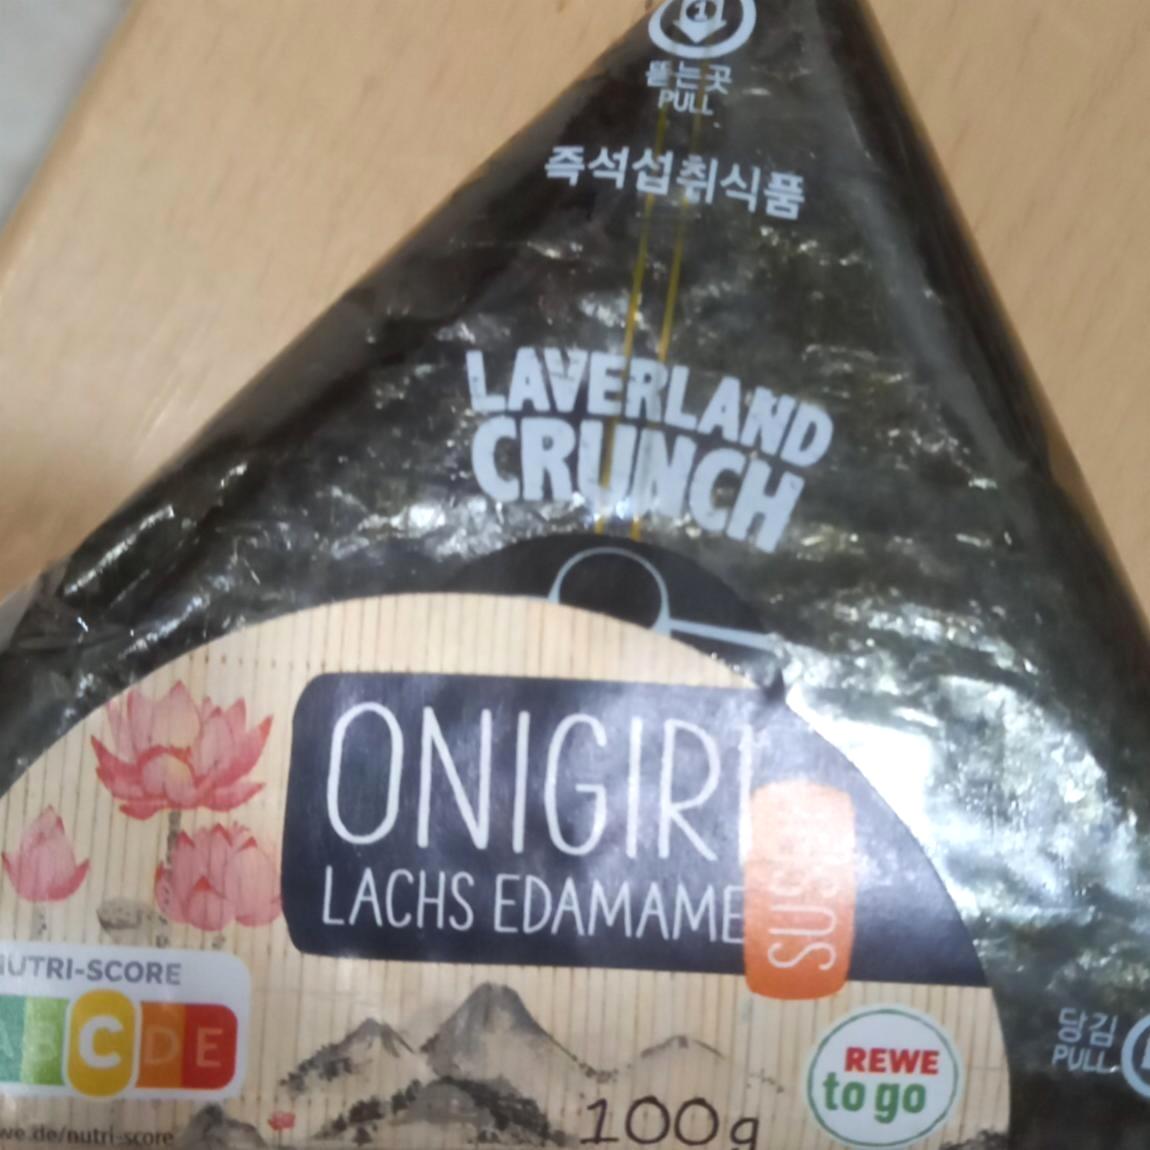 Képek - Onigiri lachs edamame Laverland crunch